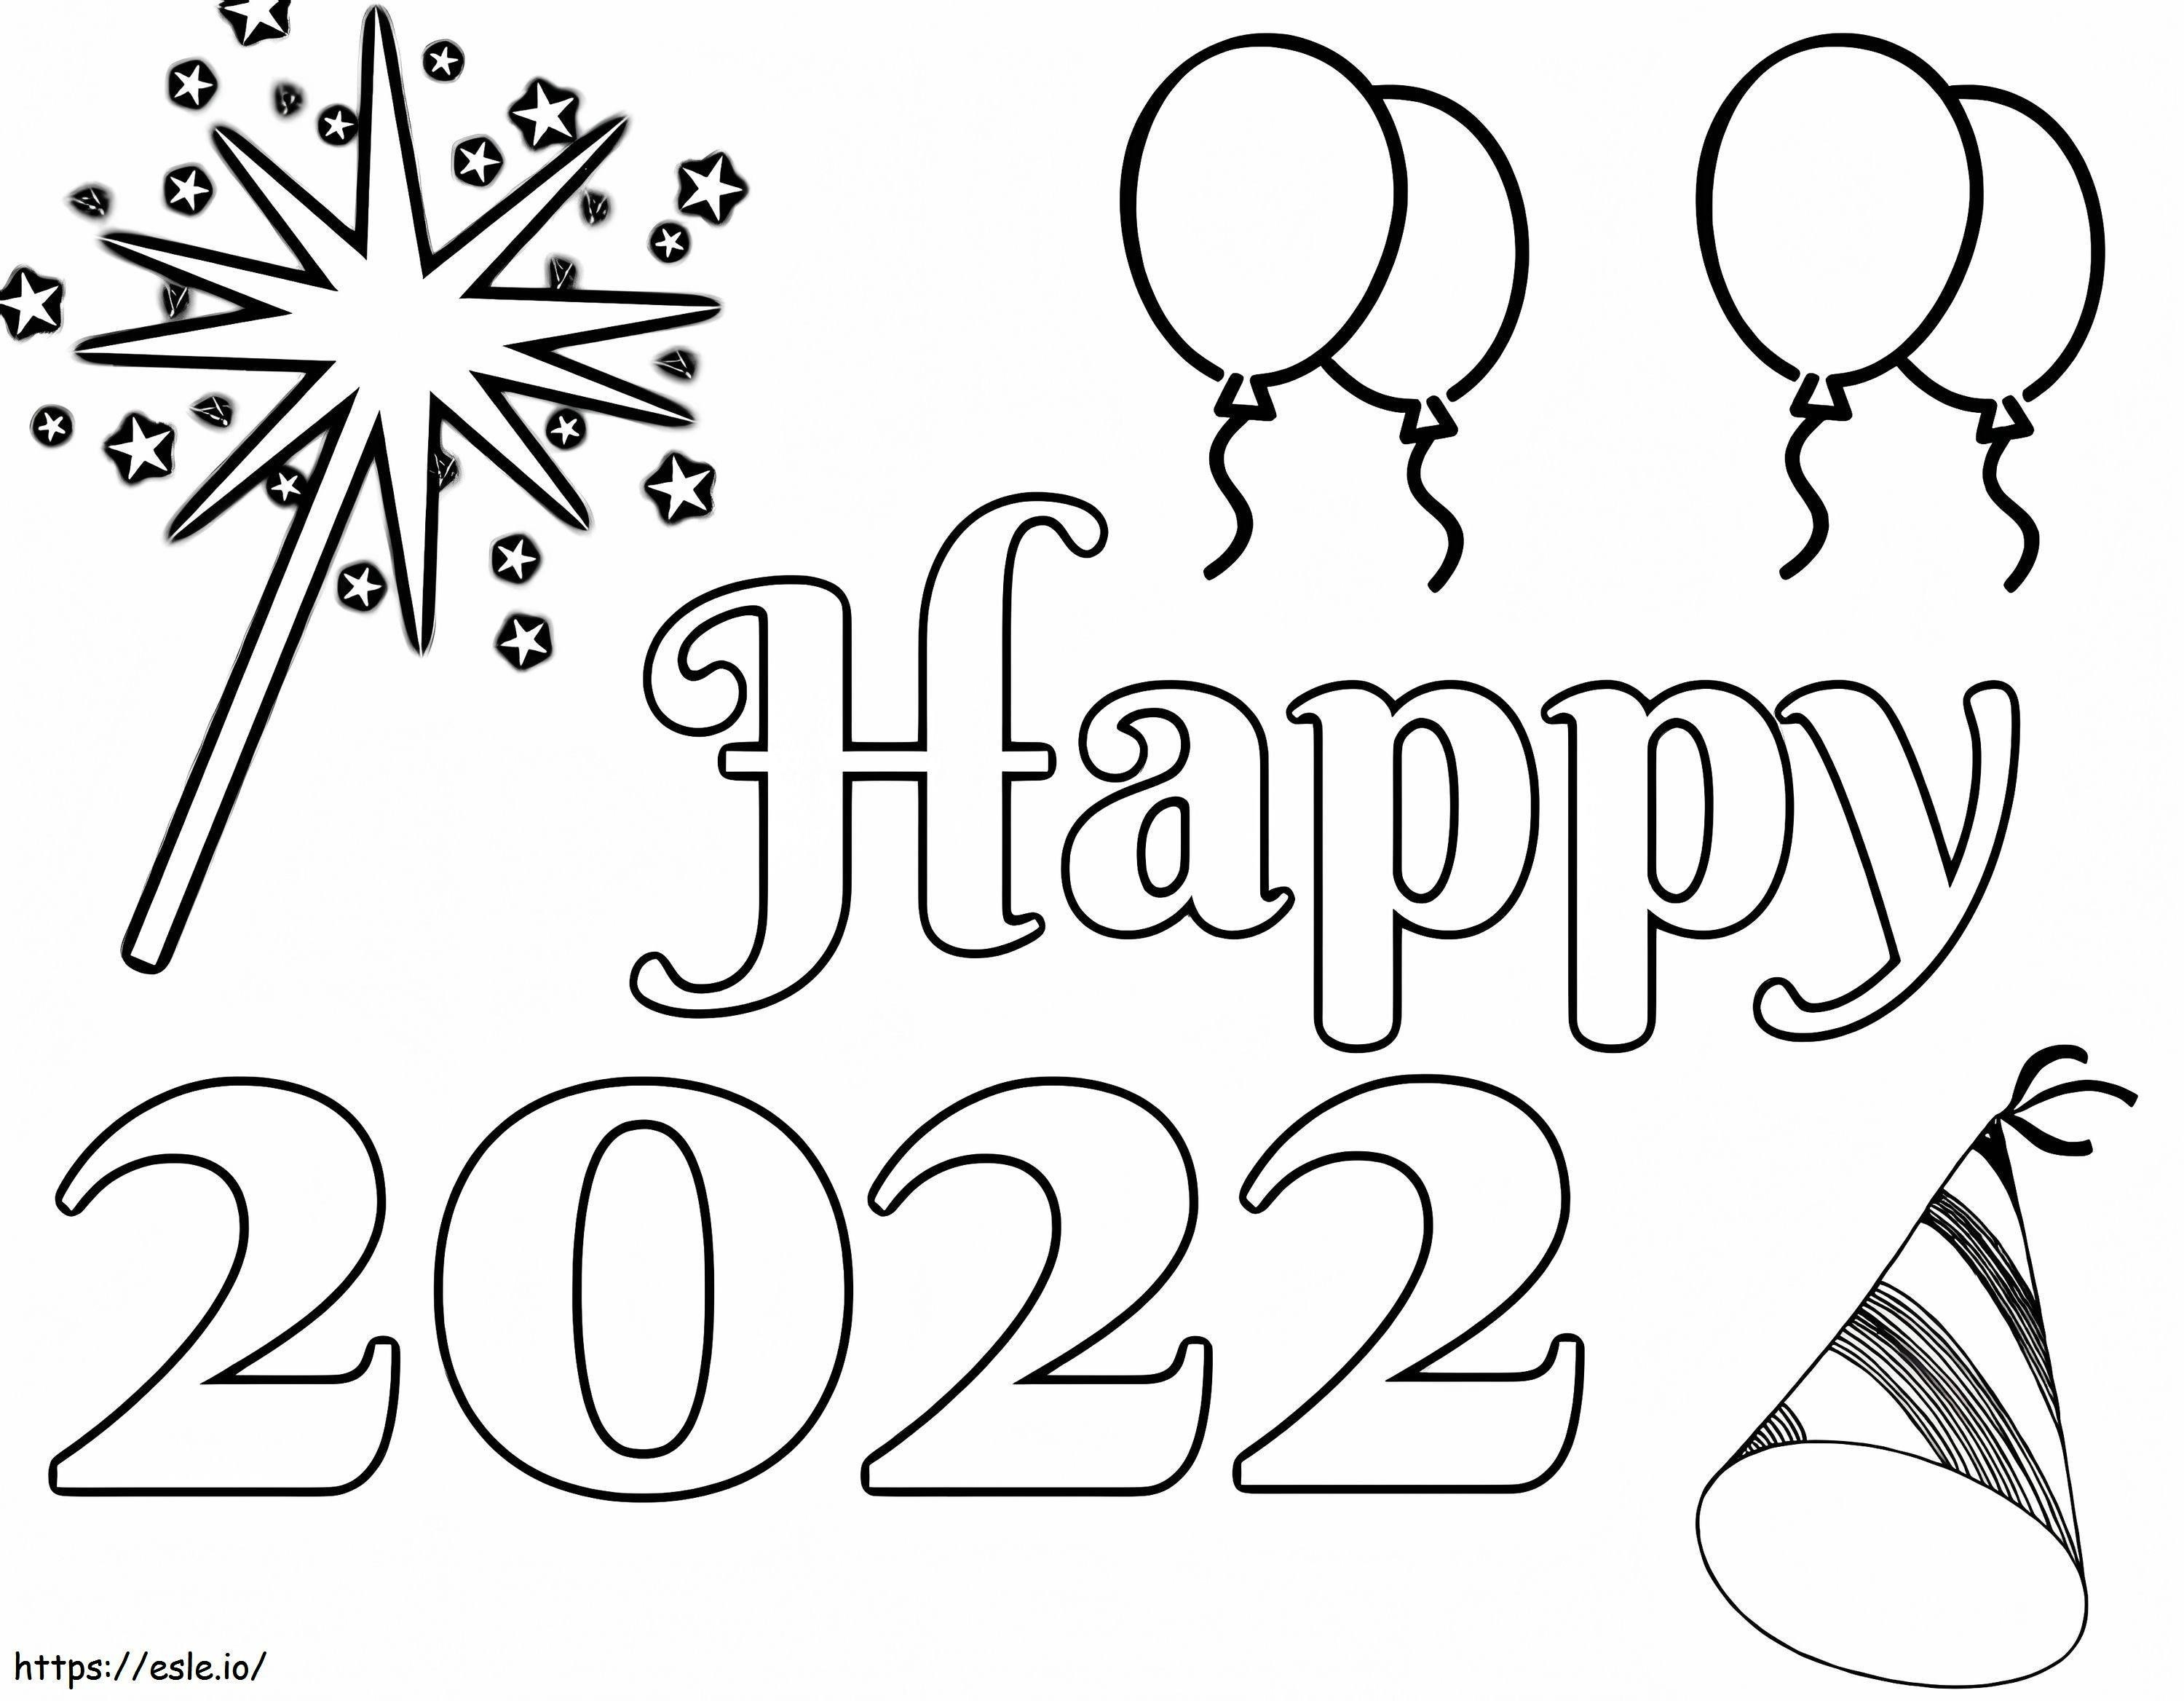 Happy 2022 coloring page